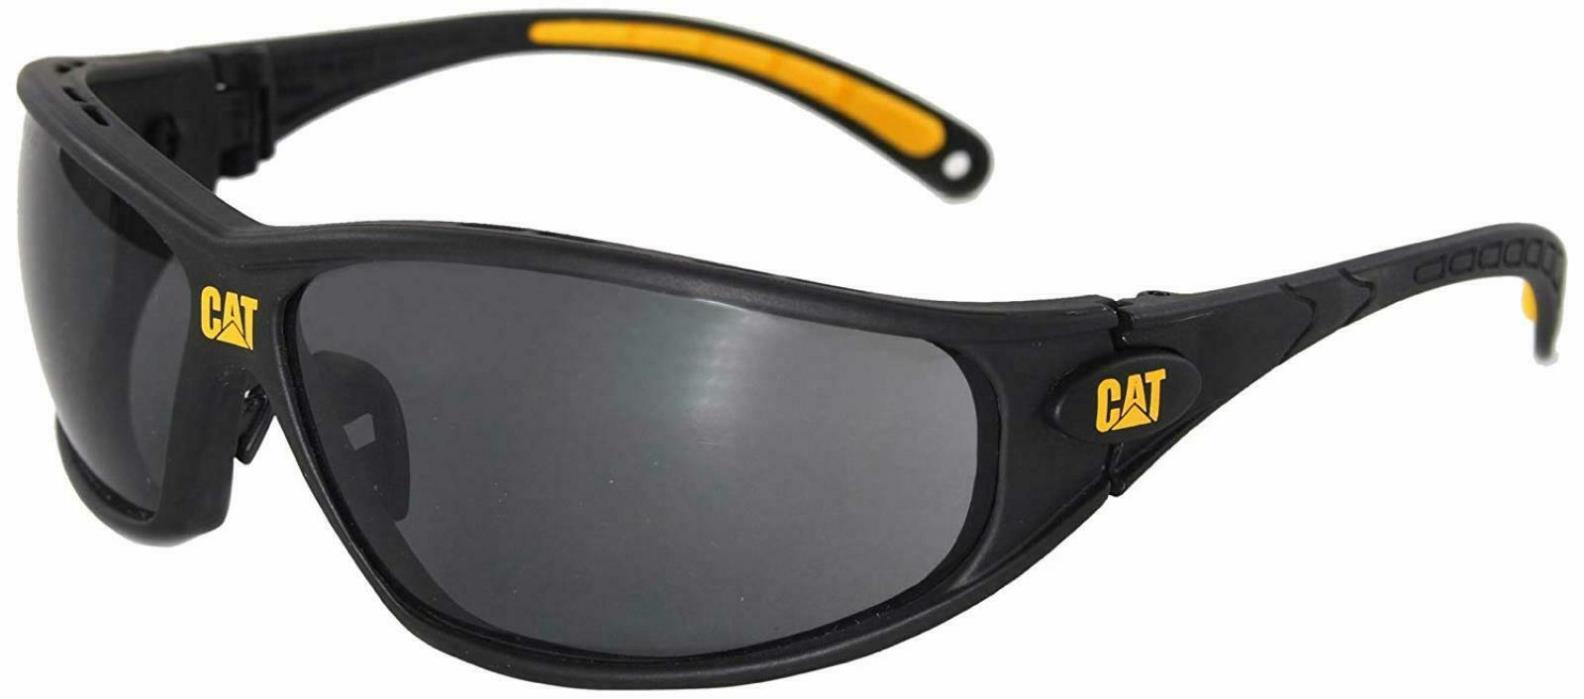 Caterpillar Tread Safety Glasses, Black And Yellow, Blue Mirror -Plastic 100% UV